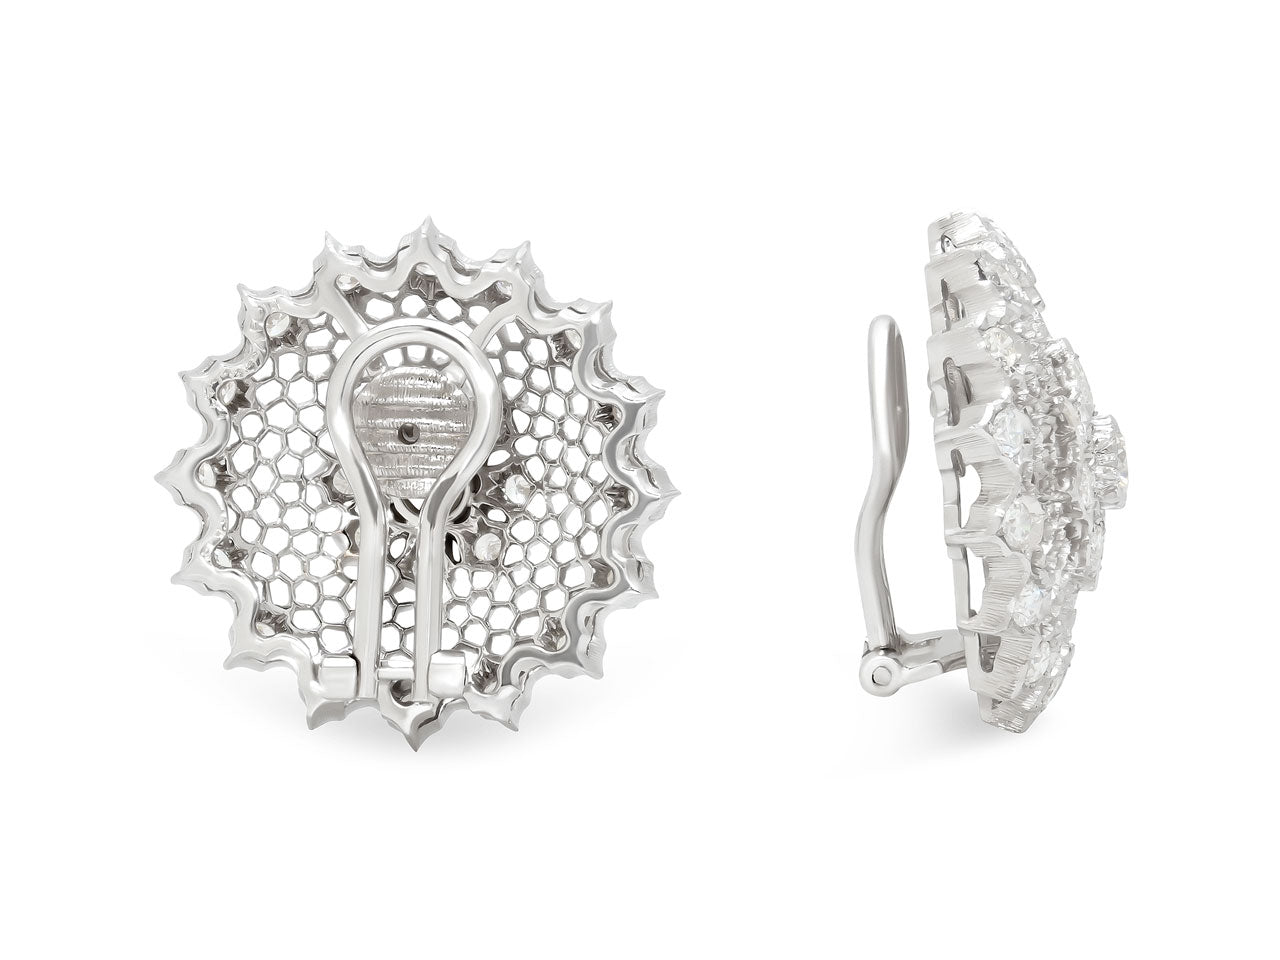 M. Buccellati 'Tulle' Diamond Earrings in 18K White Gold